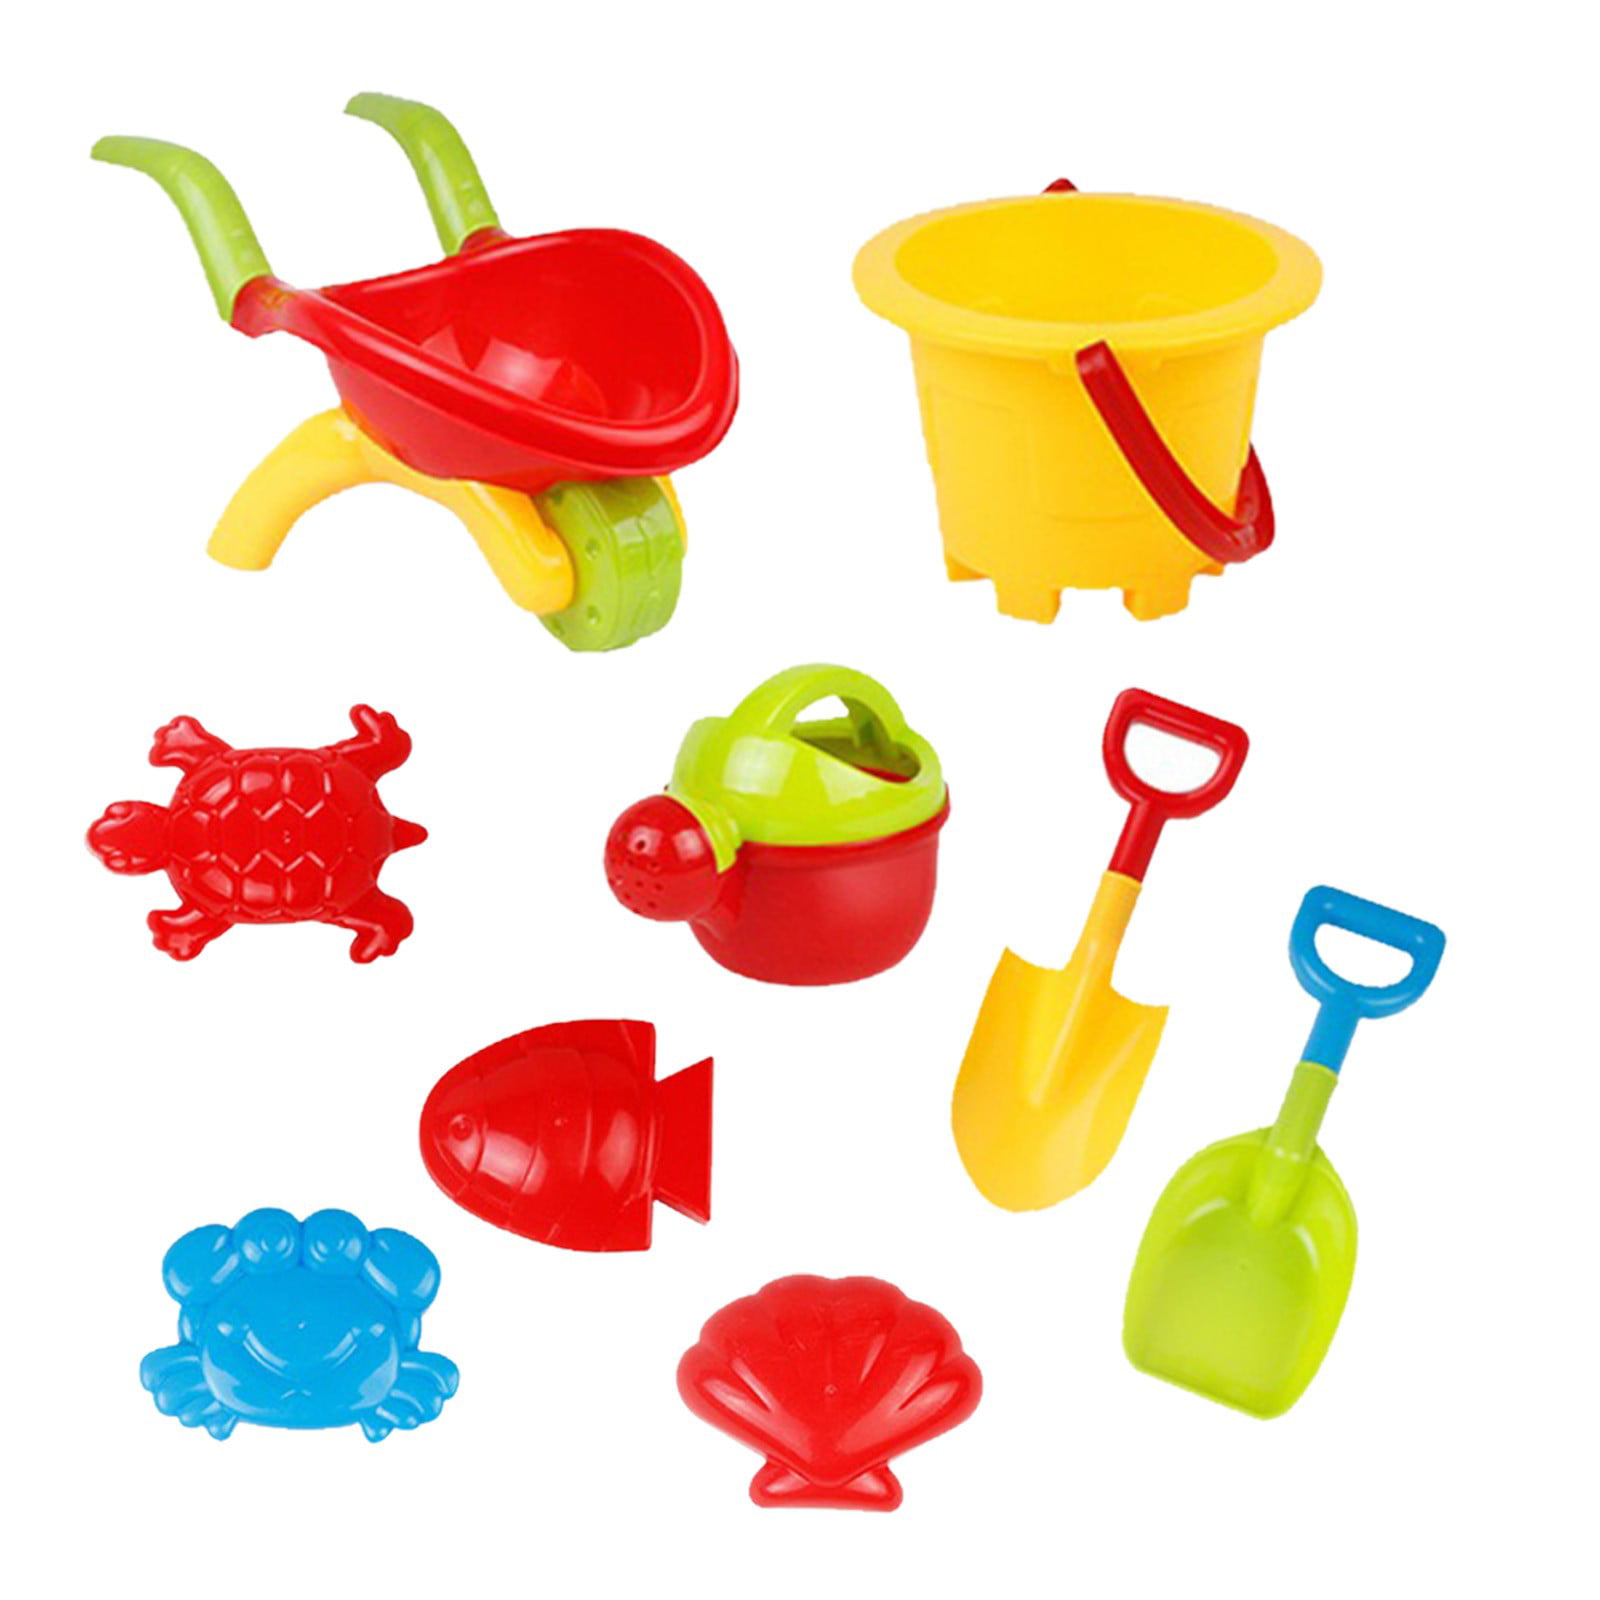 Details about   9Pcs Children Beach Sand Toys Set Bucket Watering Can Shovel Rake Mold Beach Toy 